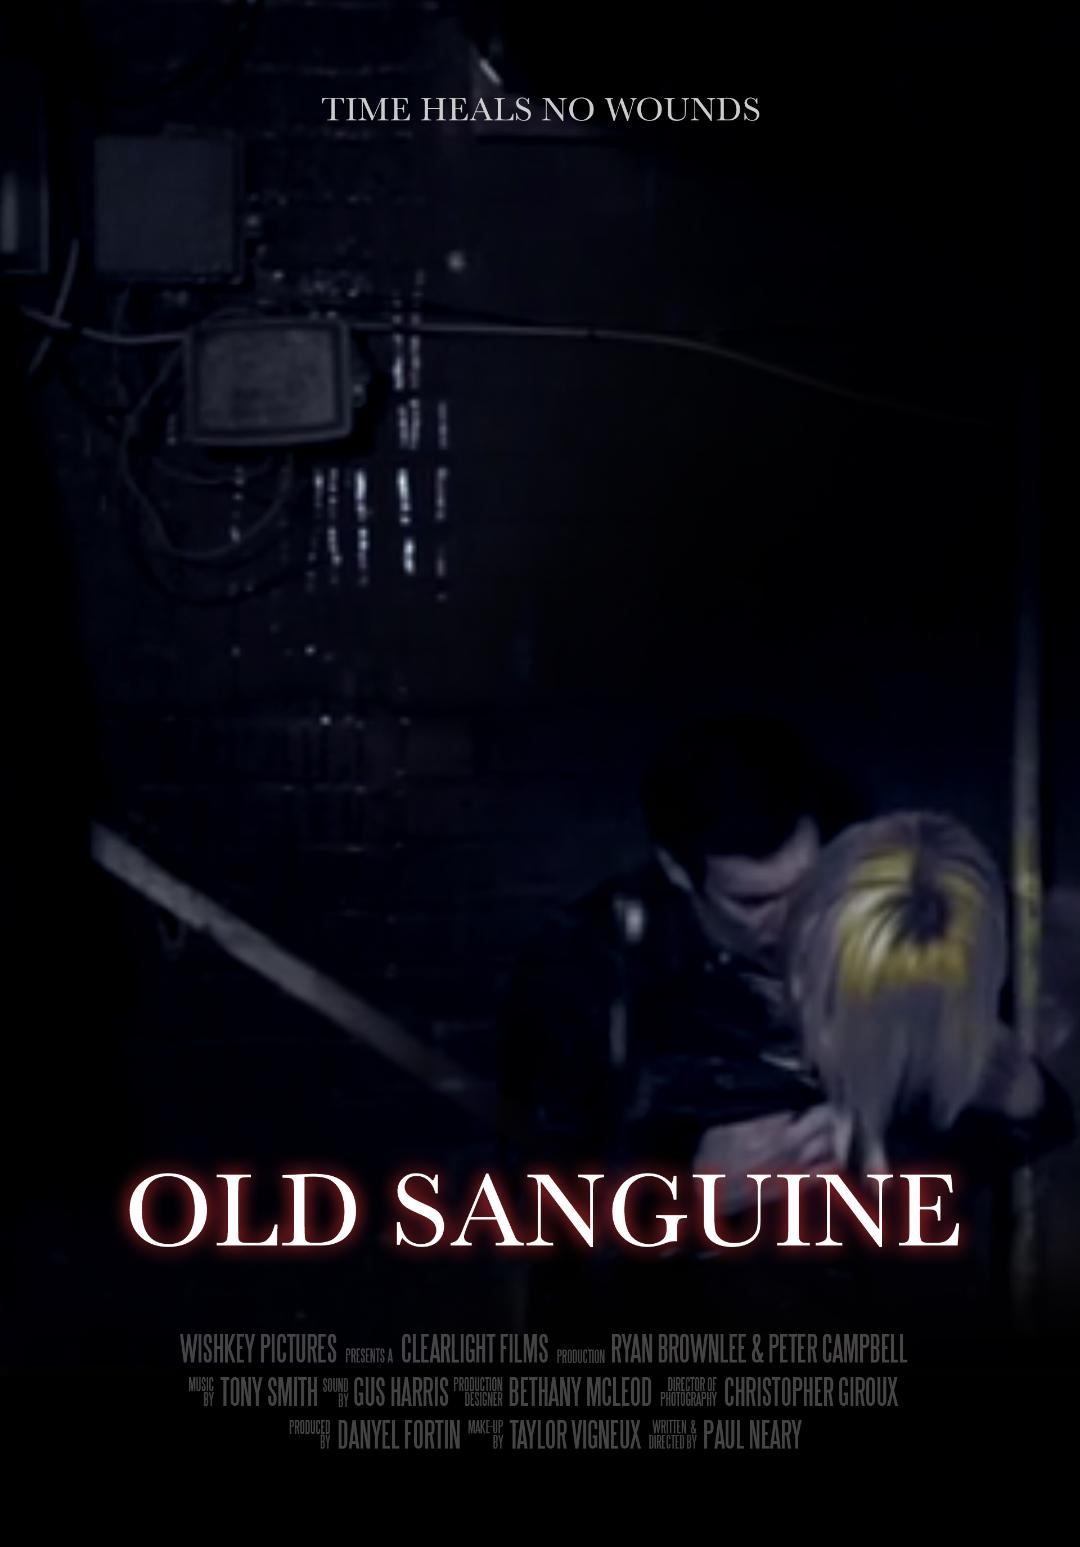 Old Sanguine